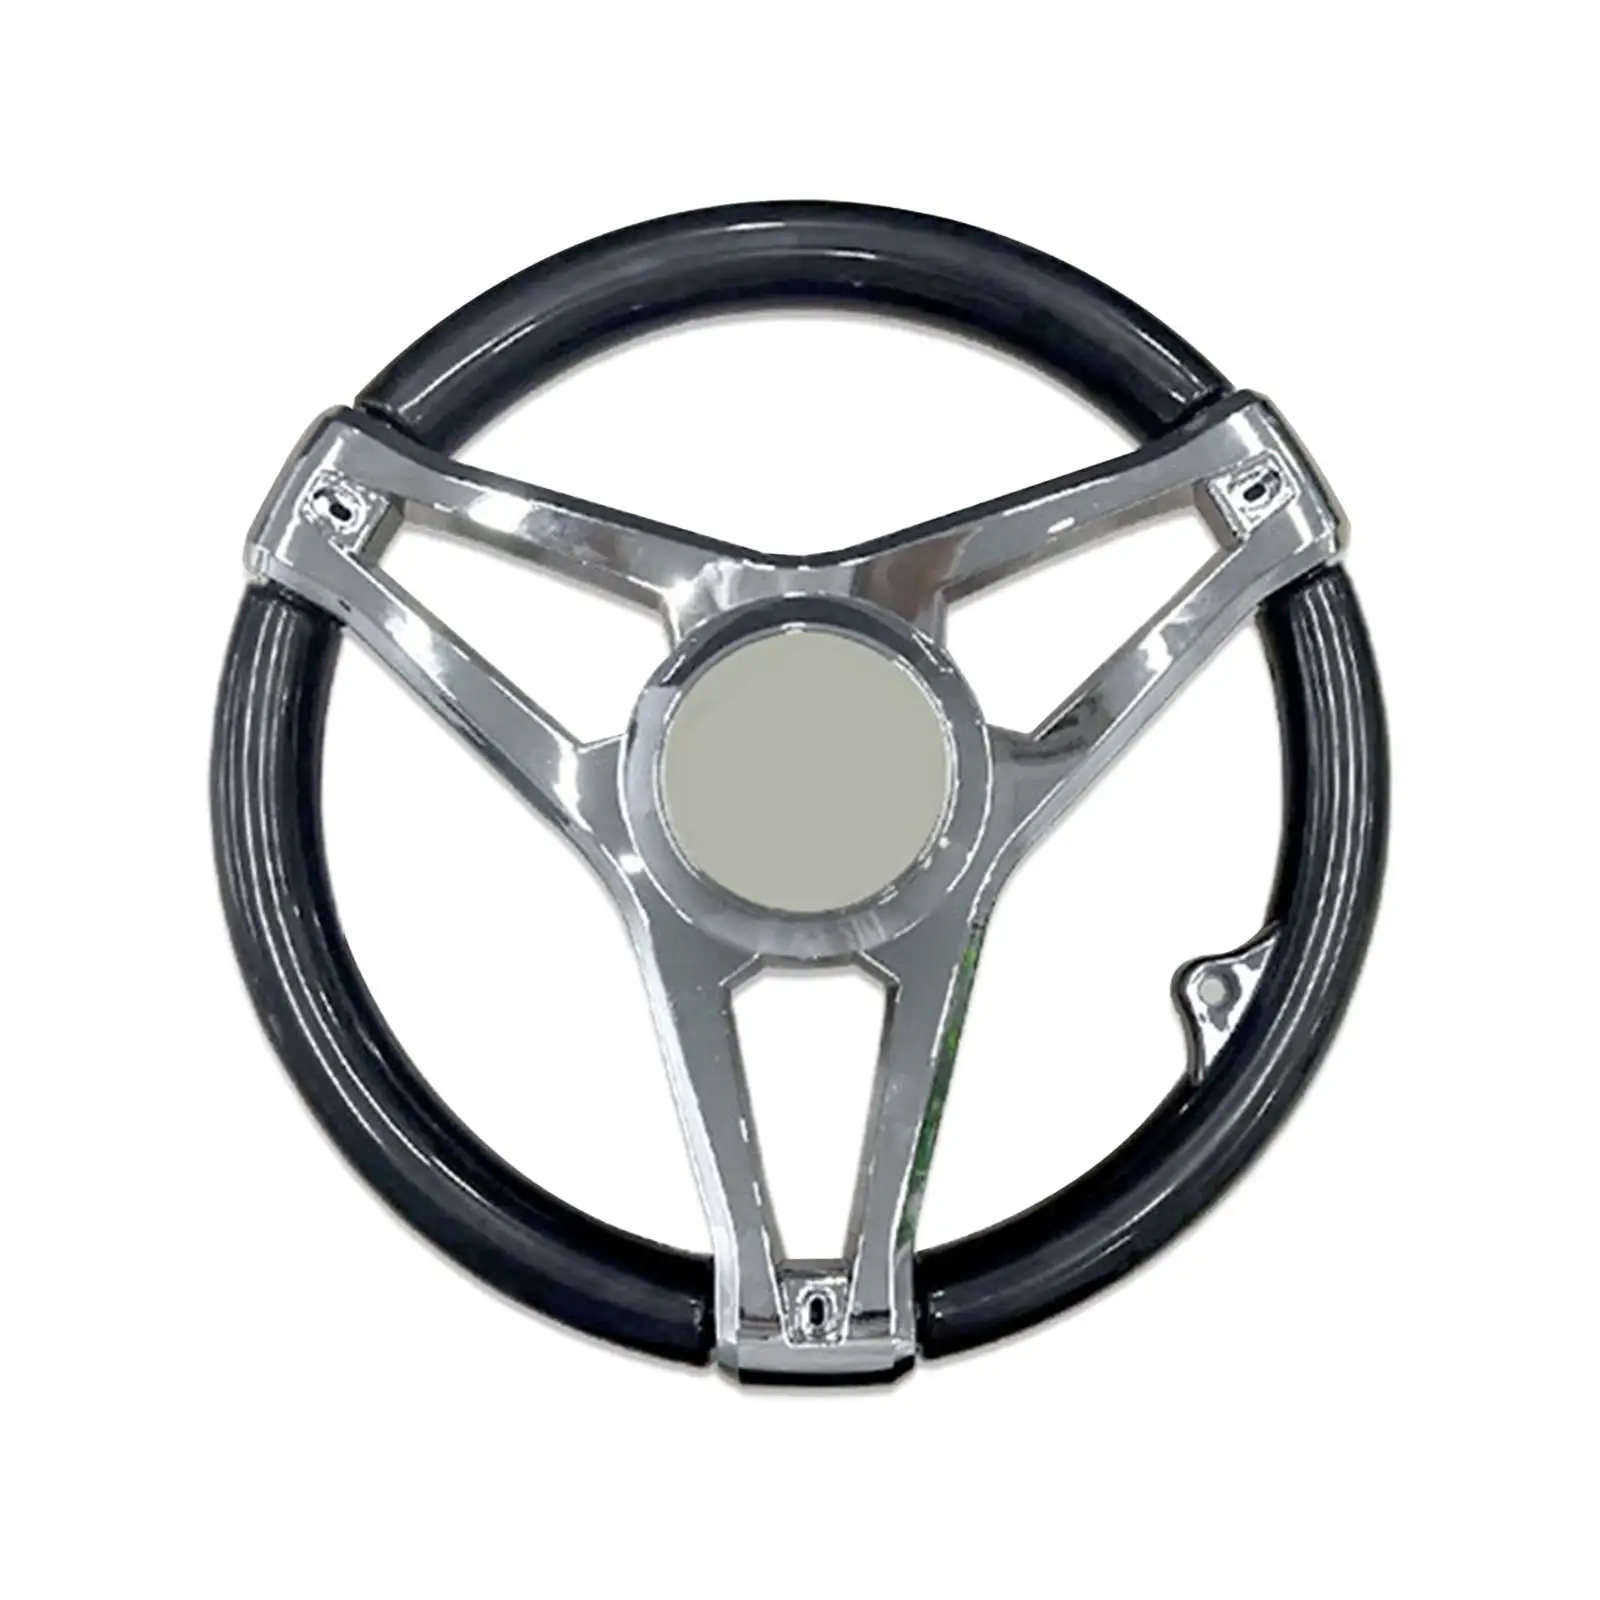 Universal Boat Steering Wheel, Accessories Weatherproof 3 Spoke Plastic for Speedboat Yacht Marine Vessels